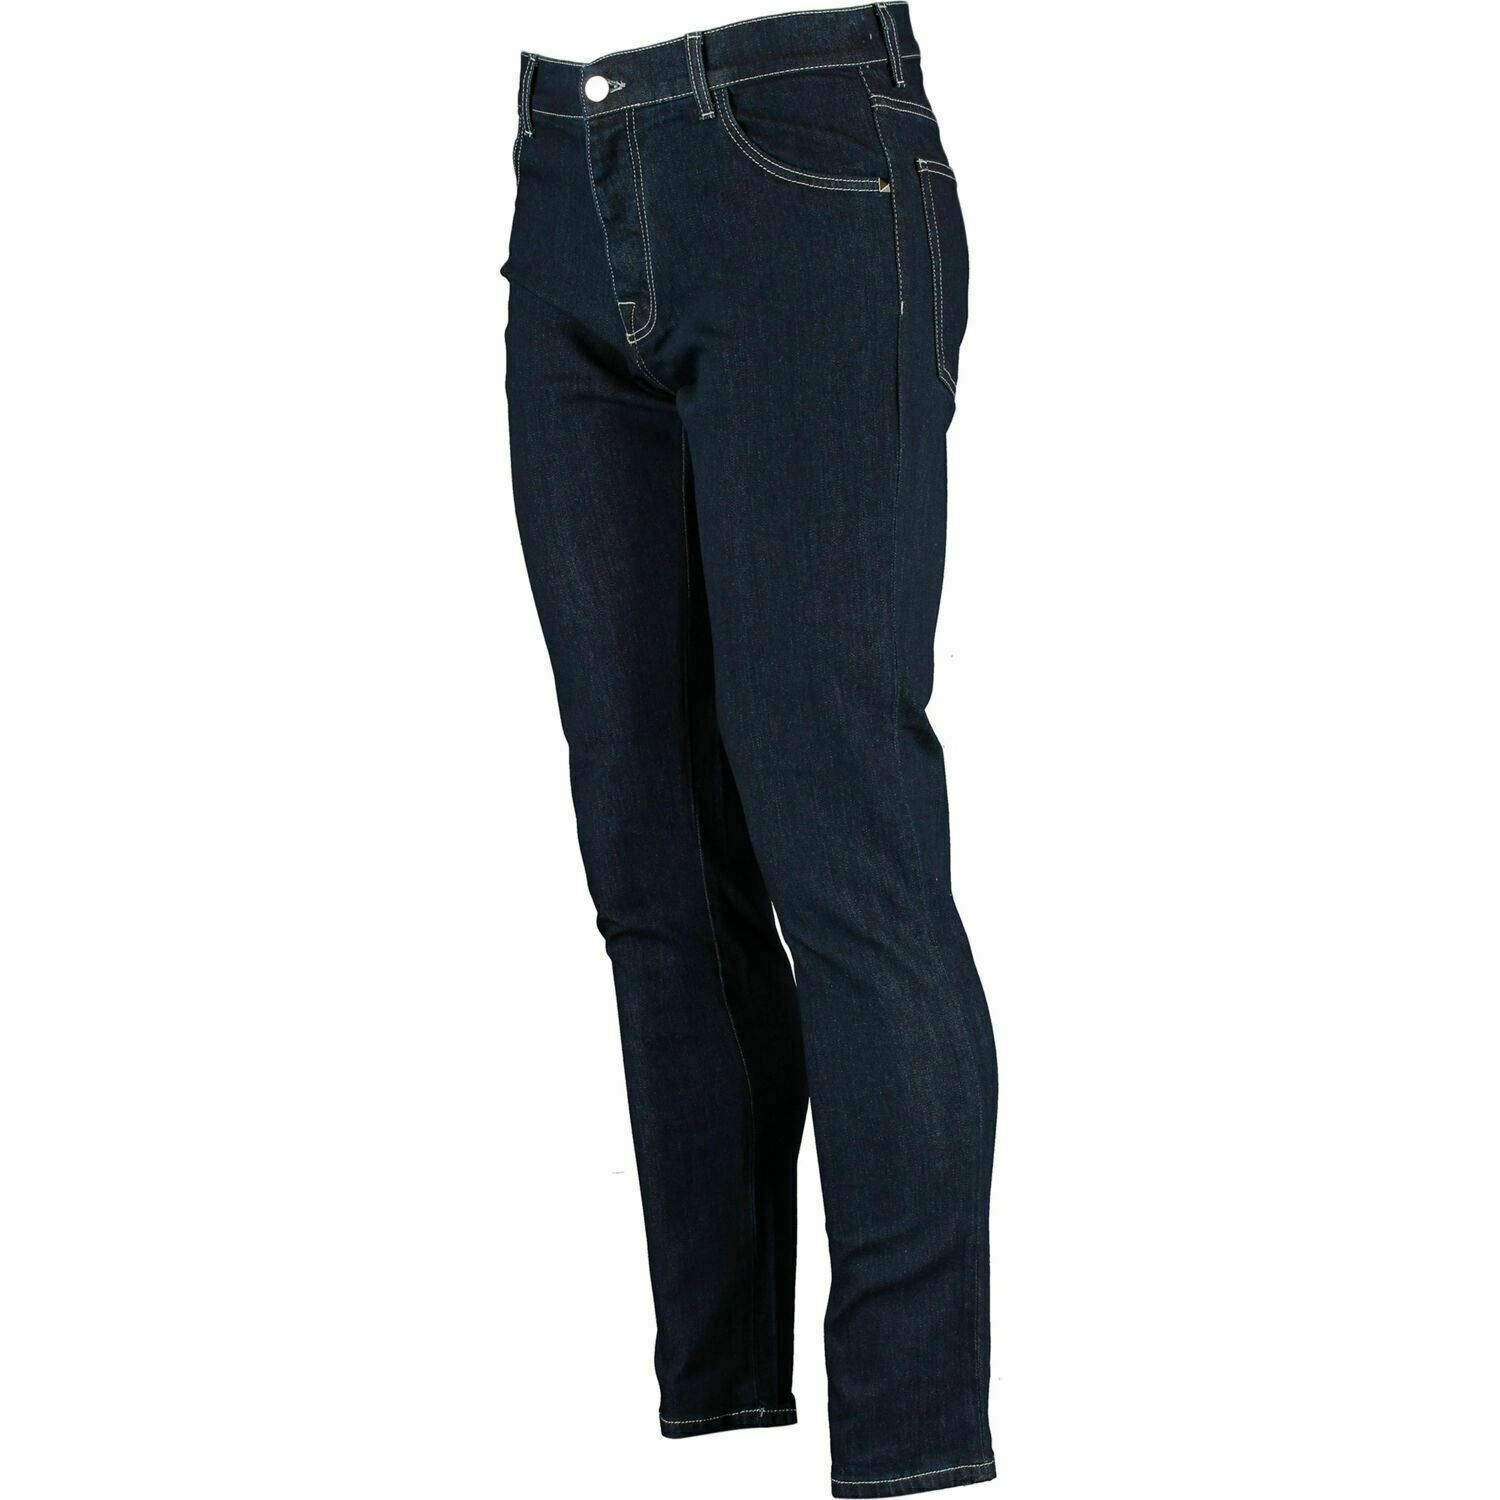 CASTELBAJAC Paris - Men's Dark Blue Modern Fit Jeans, size W34